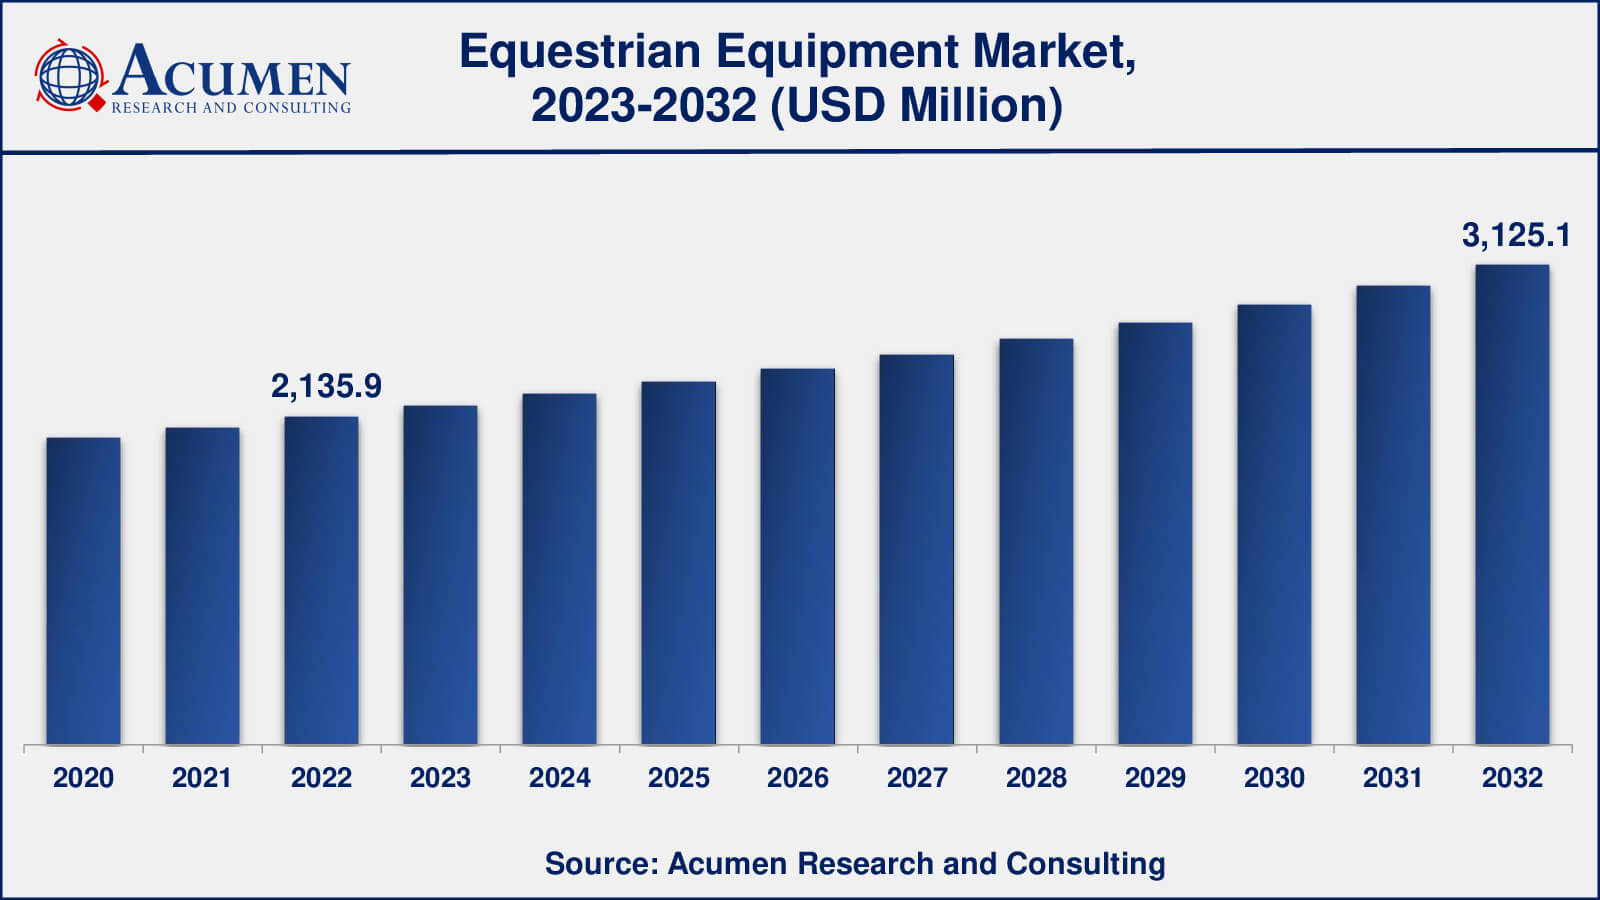 Equestrian Equipment Market Growth